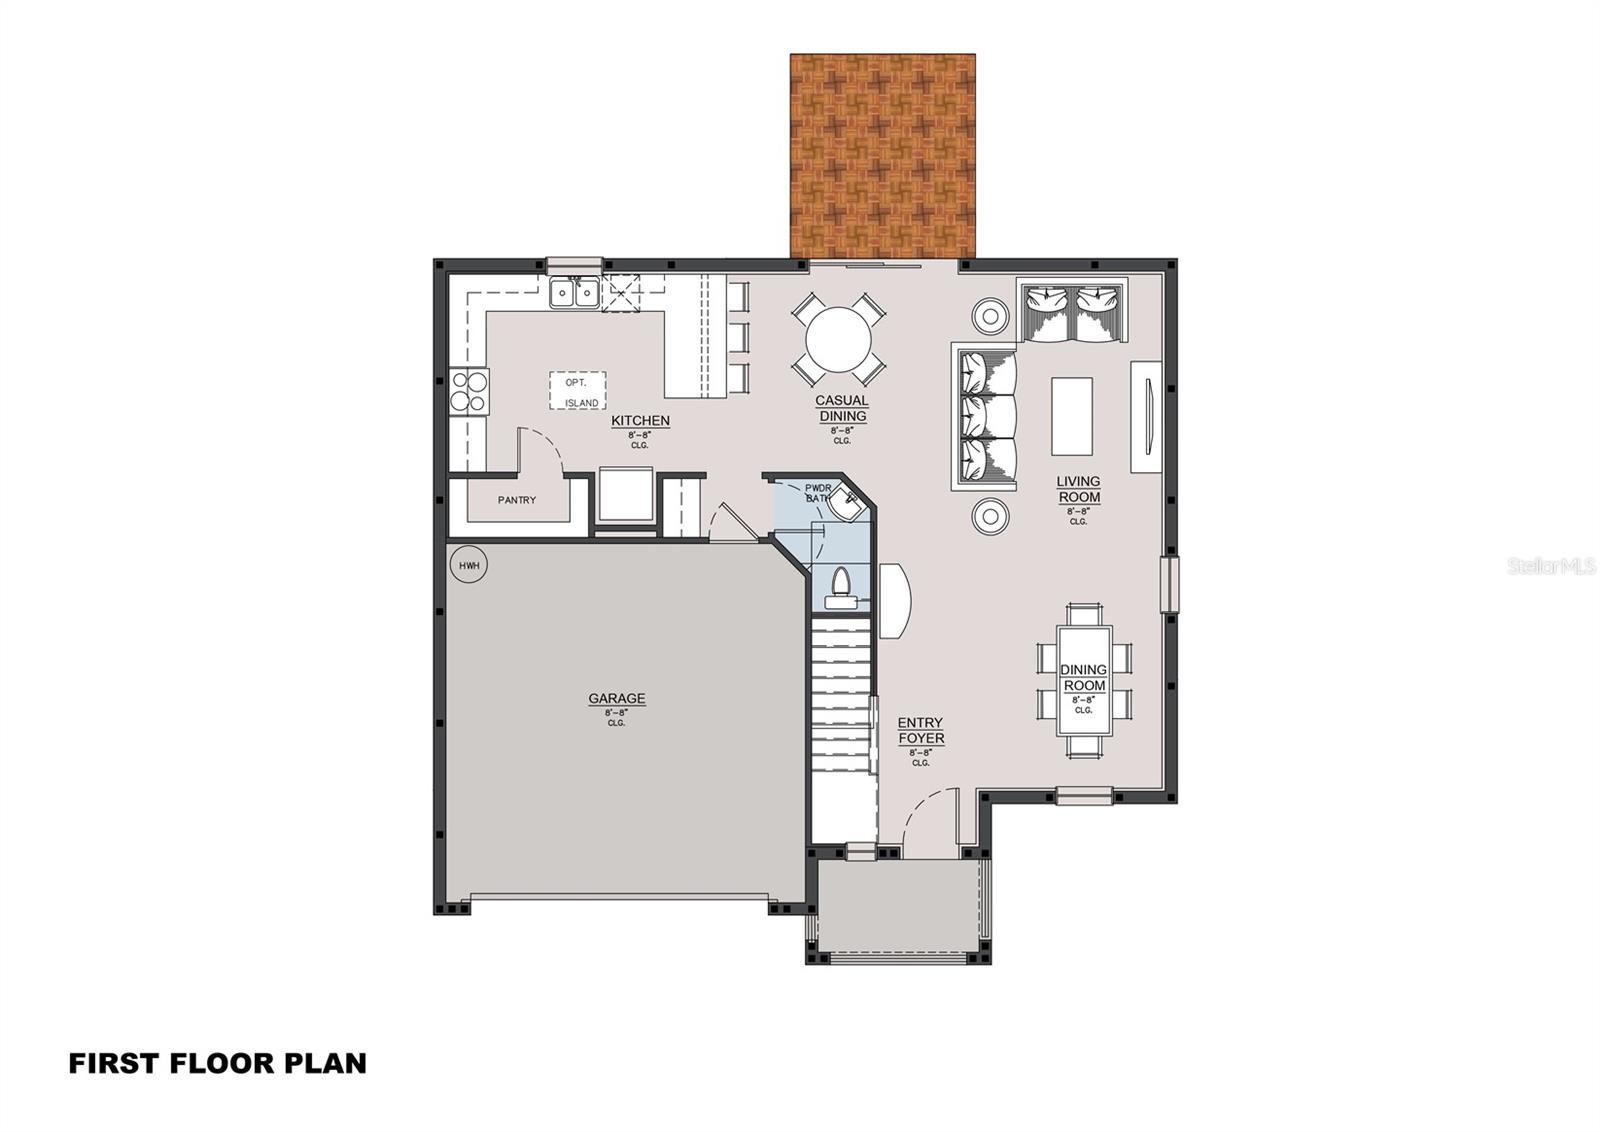 Sample First Floor Plan